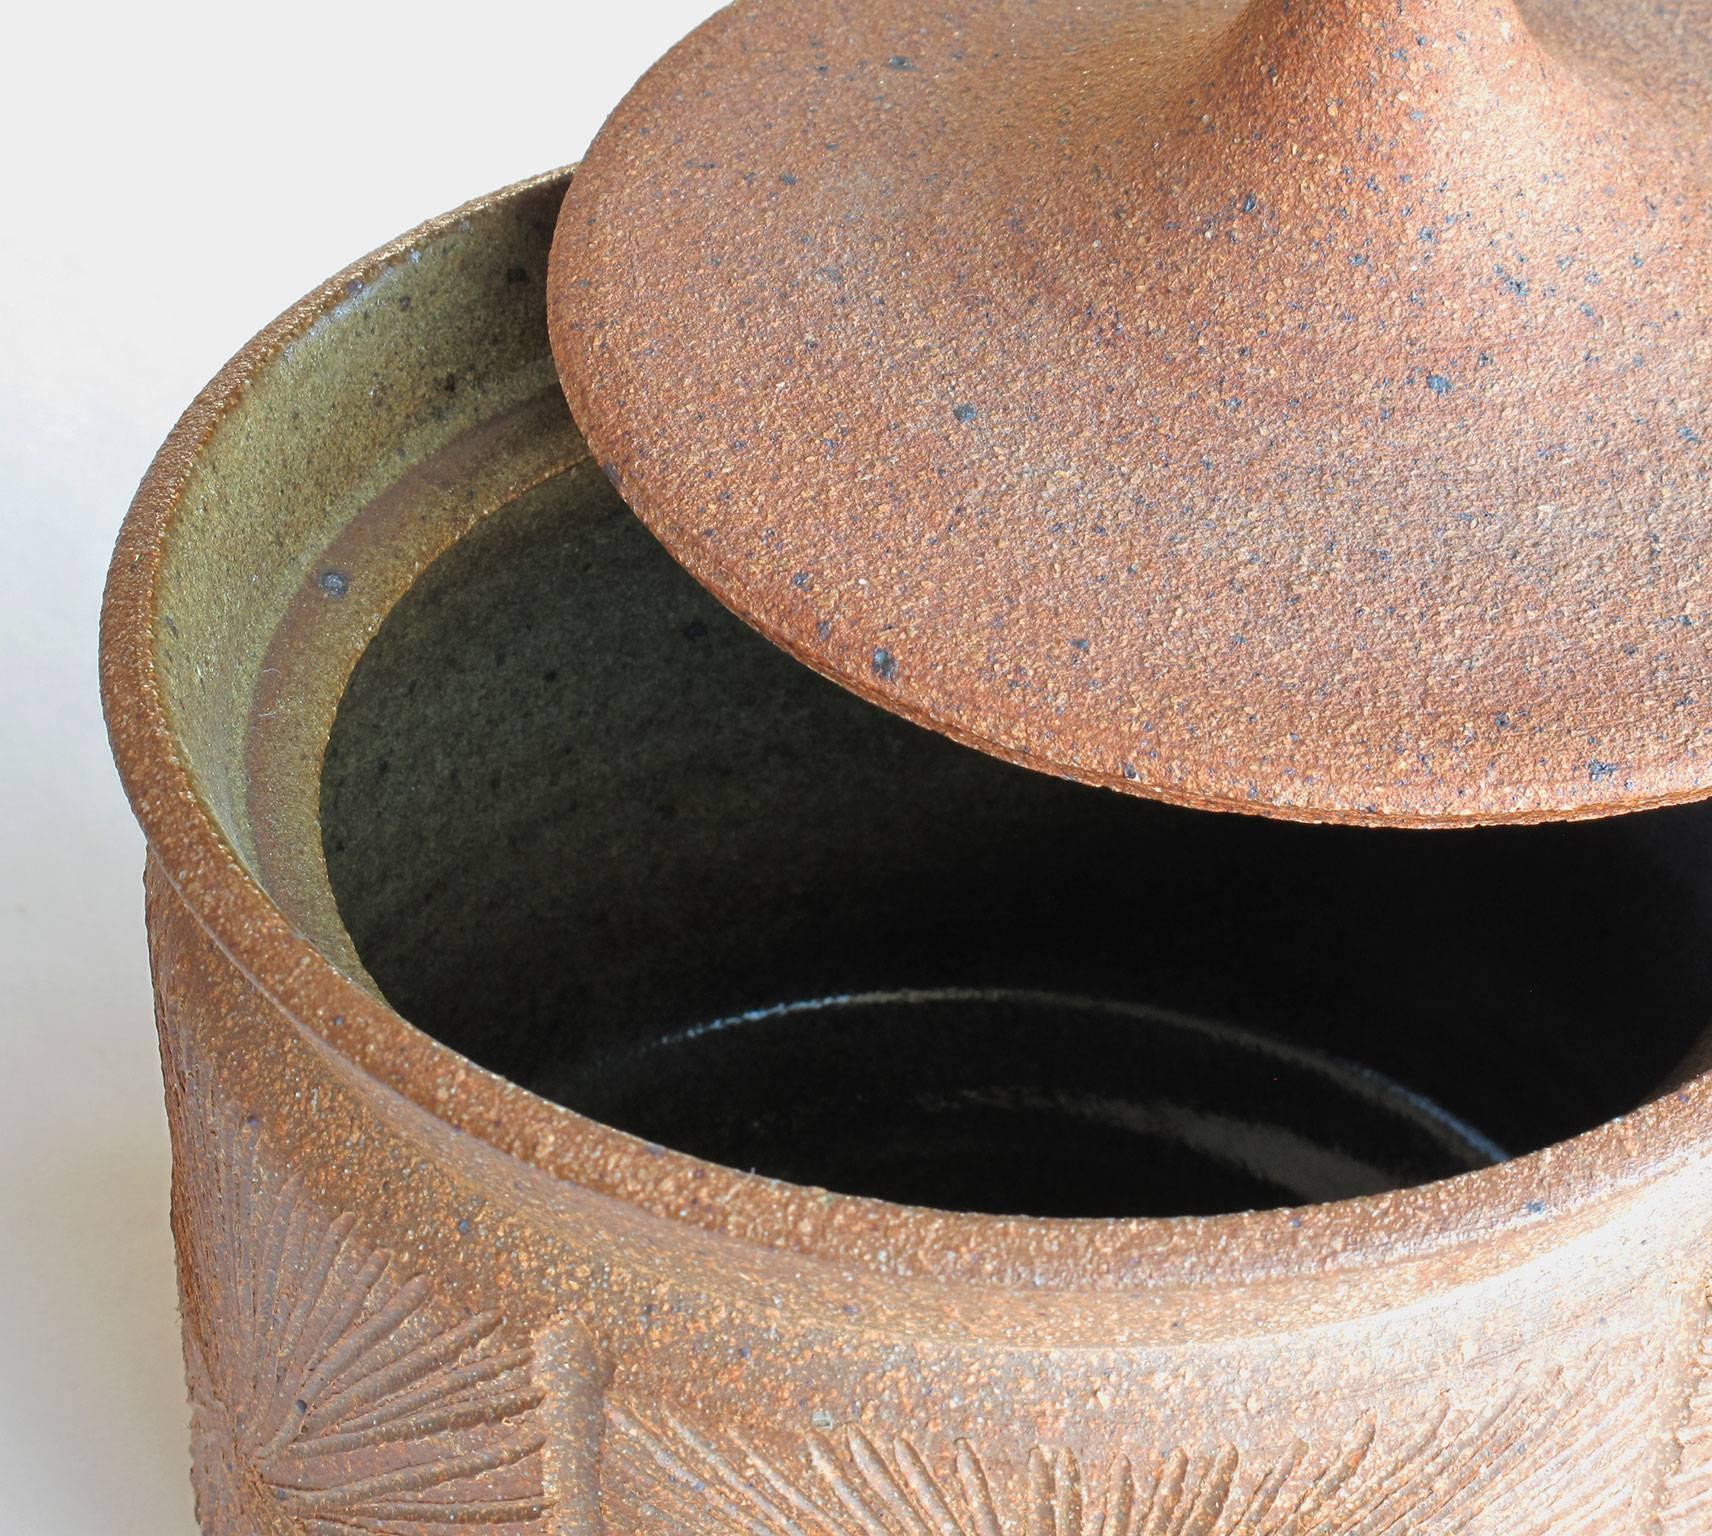 Robert Maxwell 'Sunburst' Design Ceramic Pot with Lid, 1960s For Sale 1